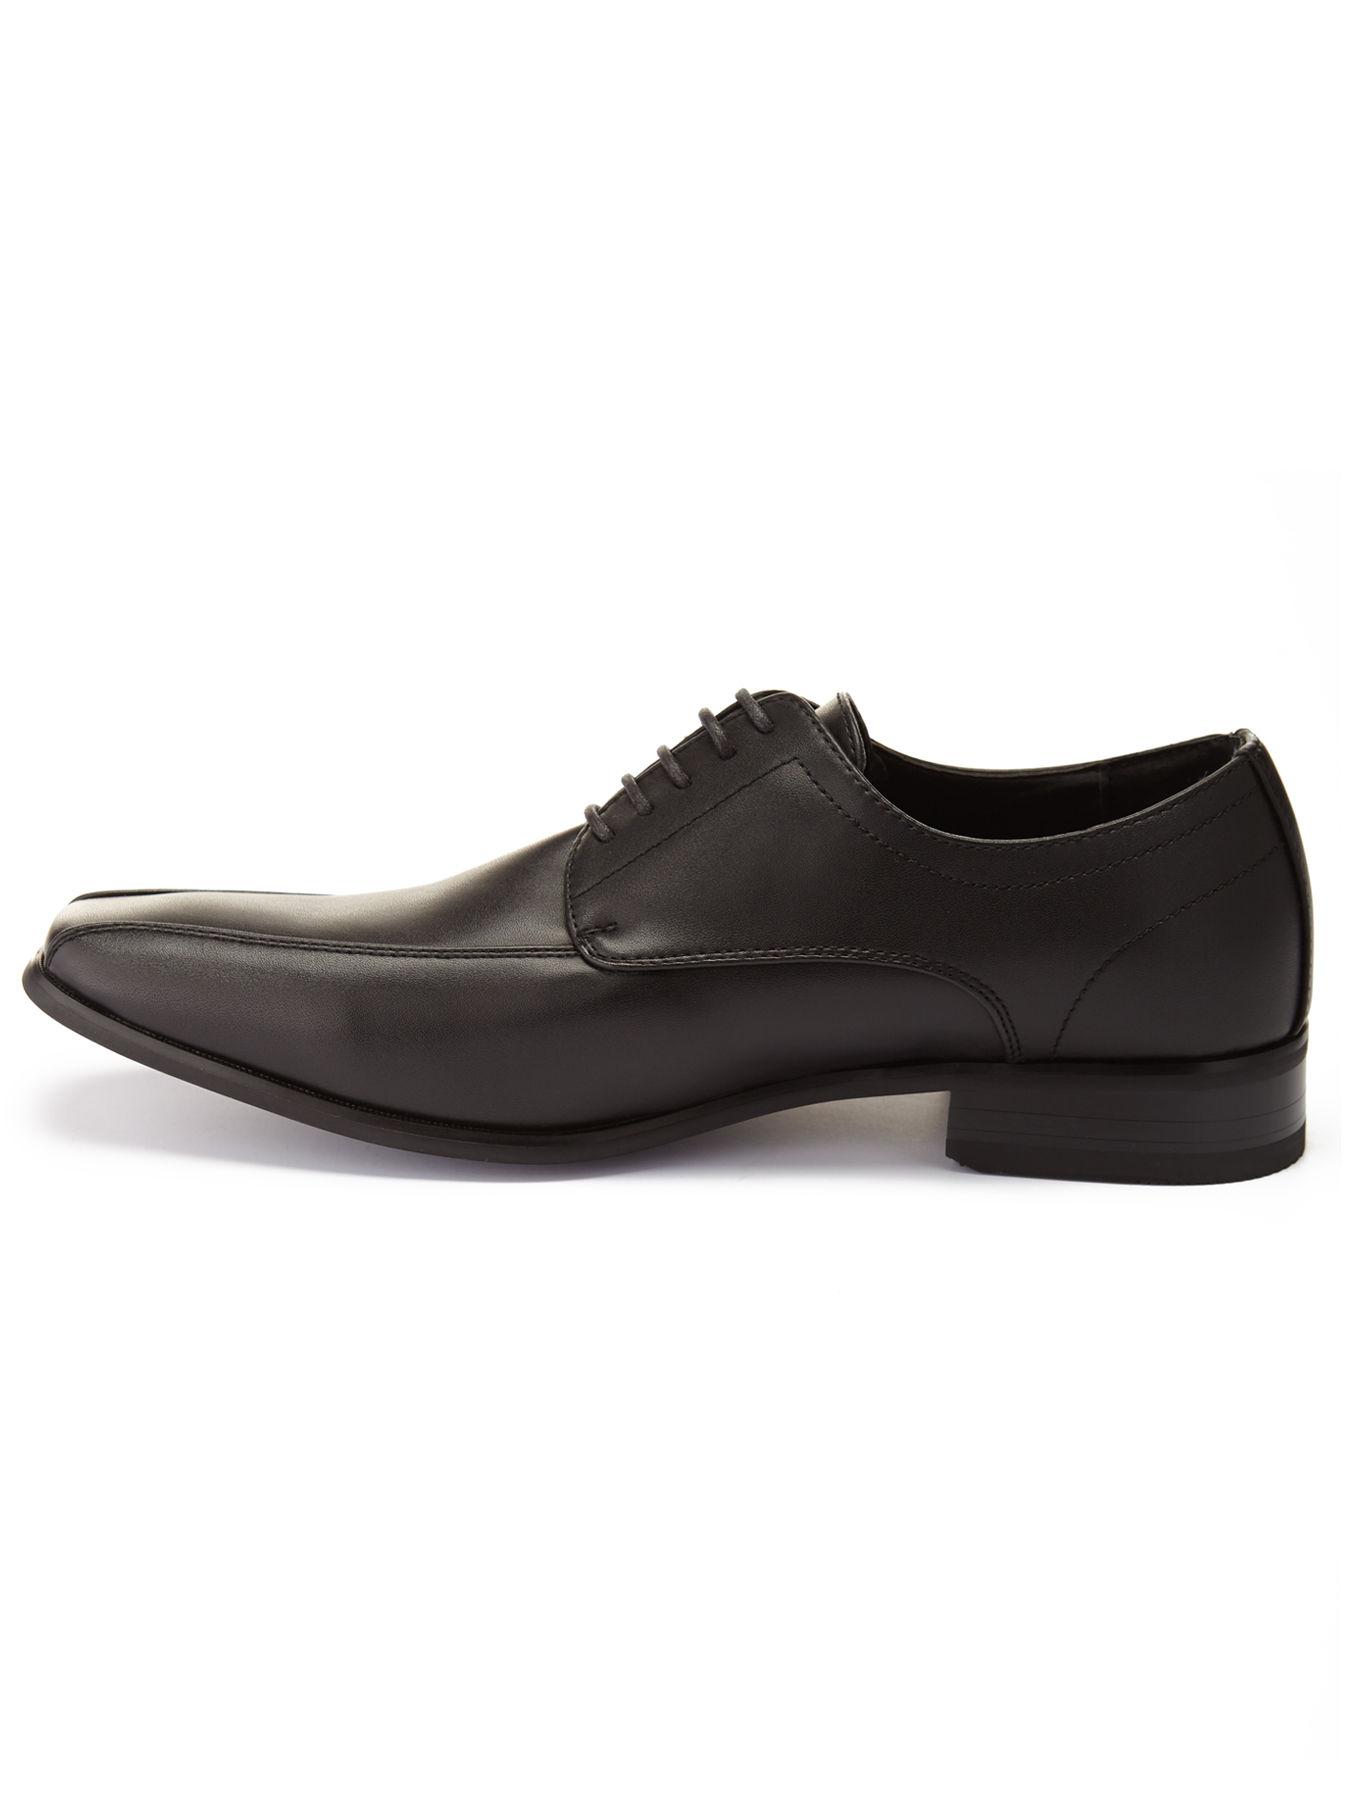 Perry Ellis Stanley Dress Shoe in Black for Men - Lyst